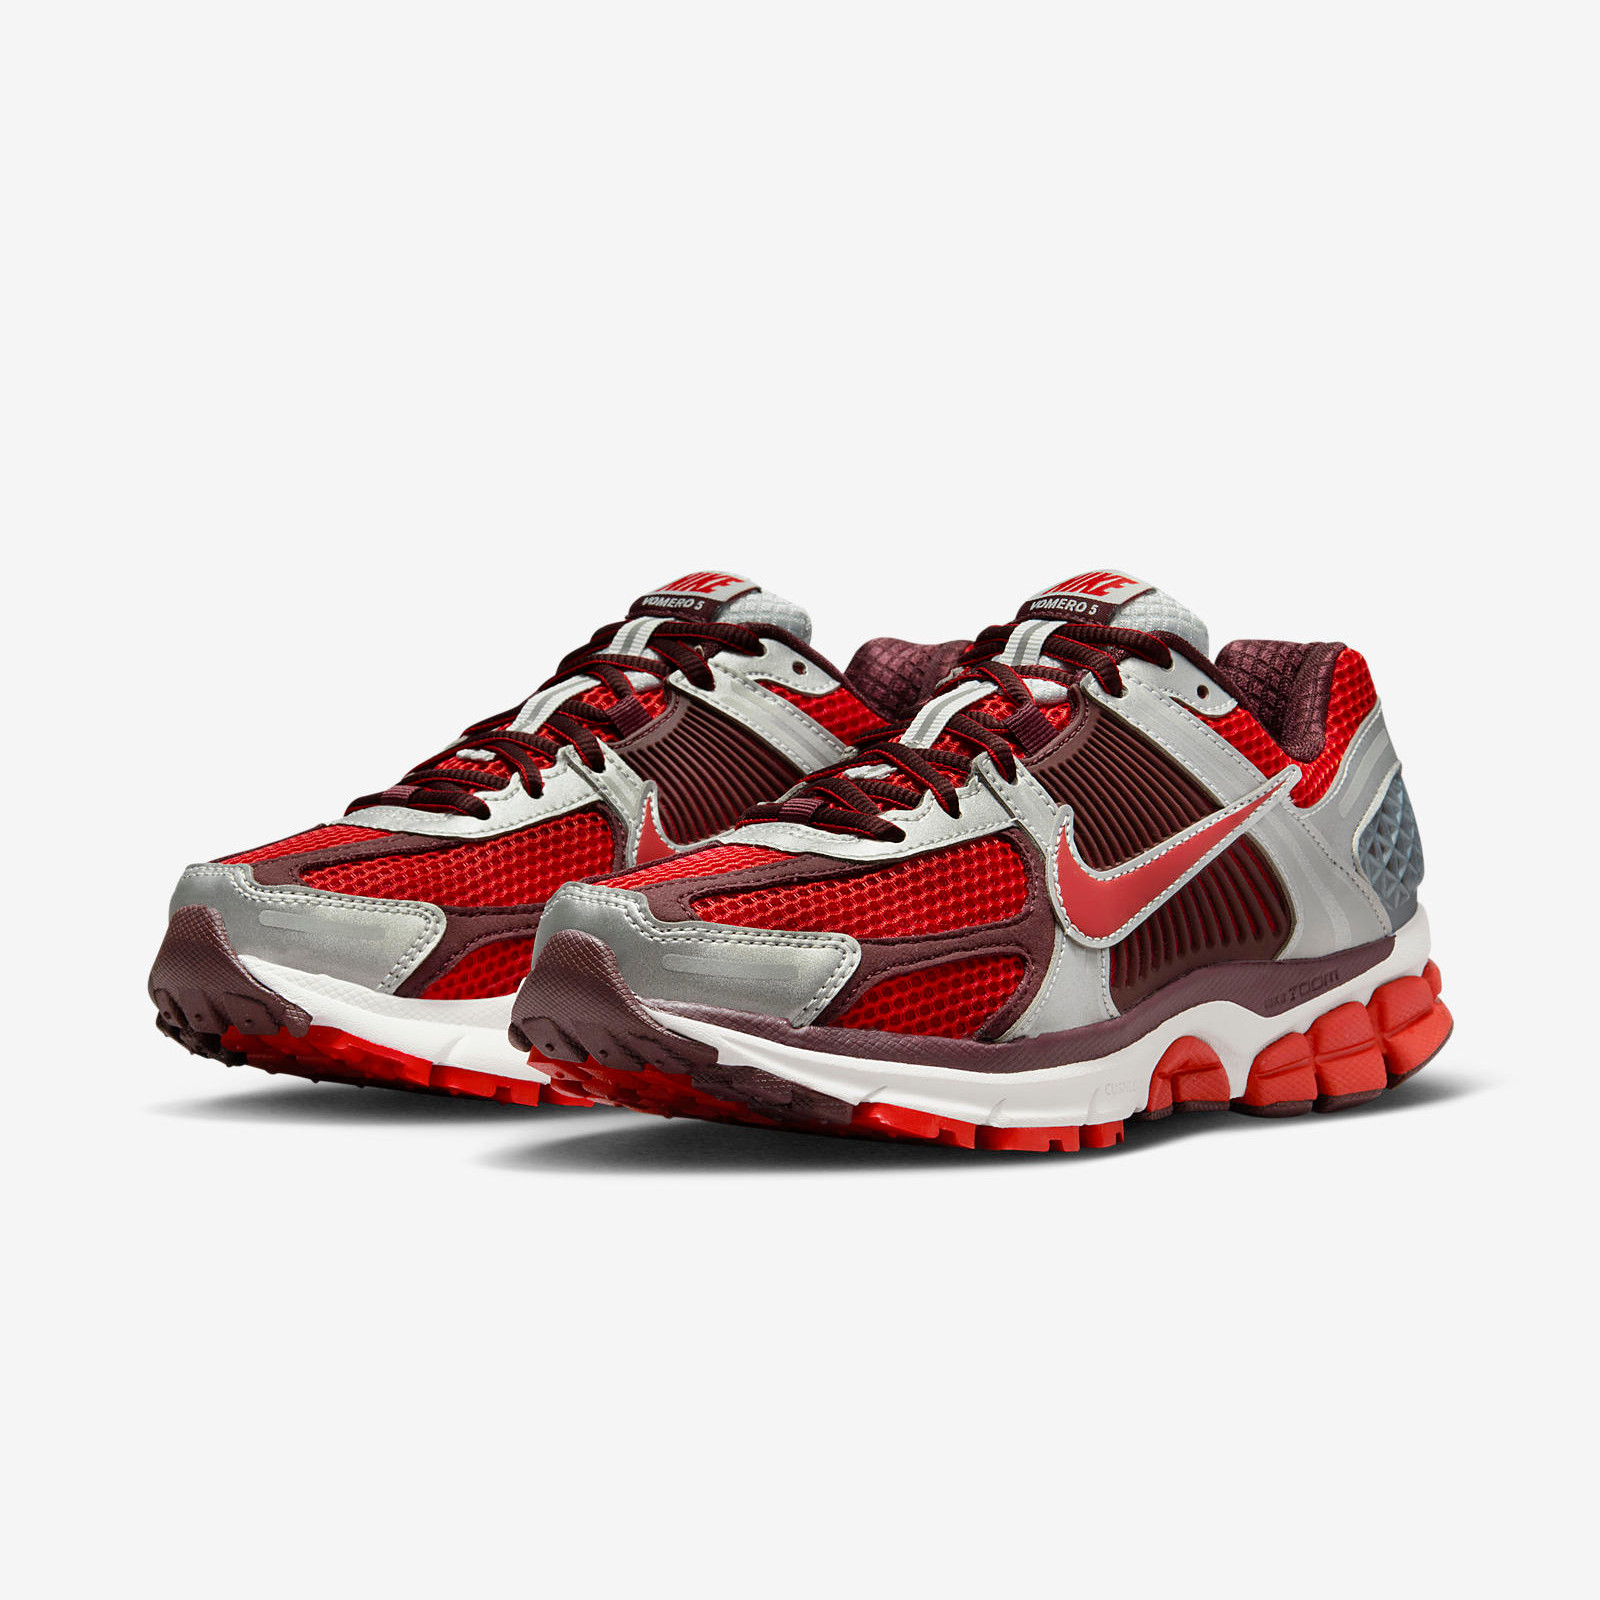 Nike Vomero 5
Red / Platinum